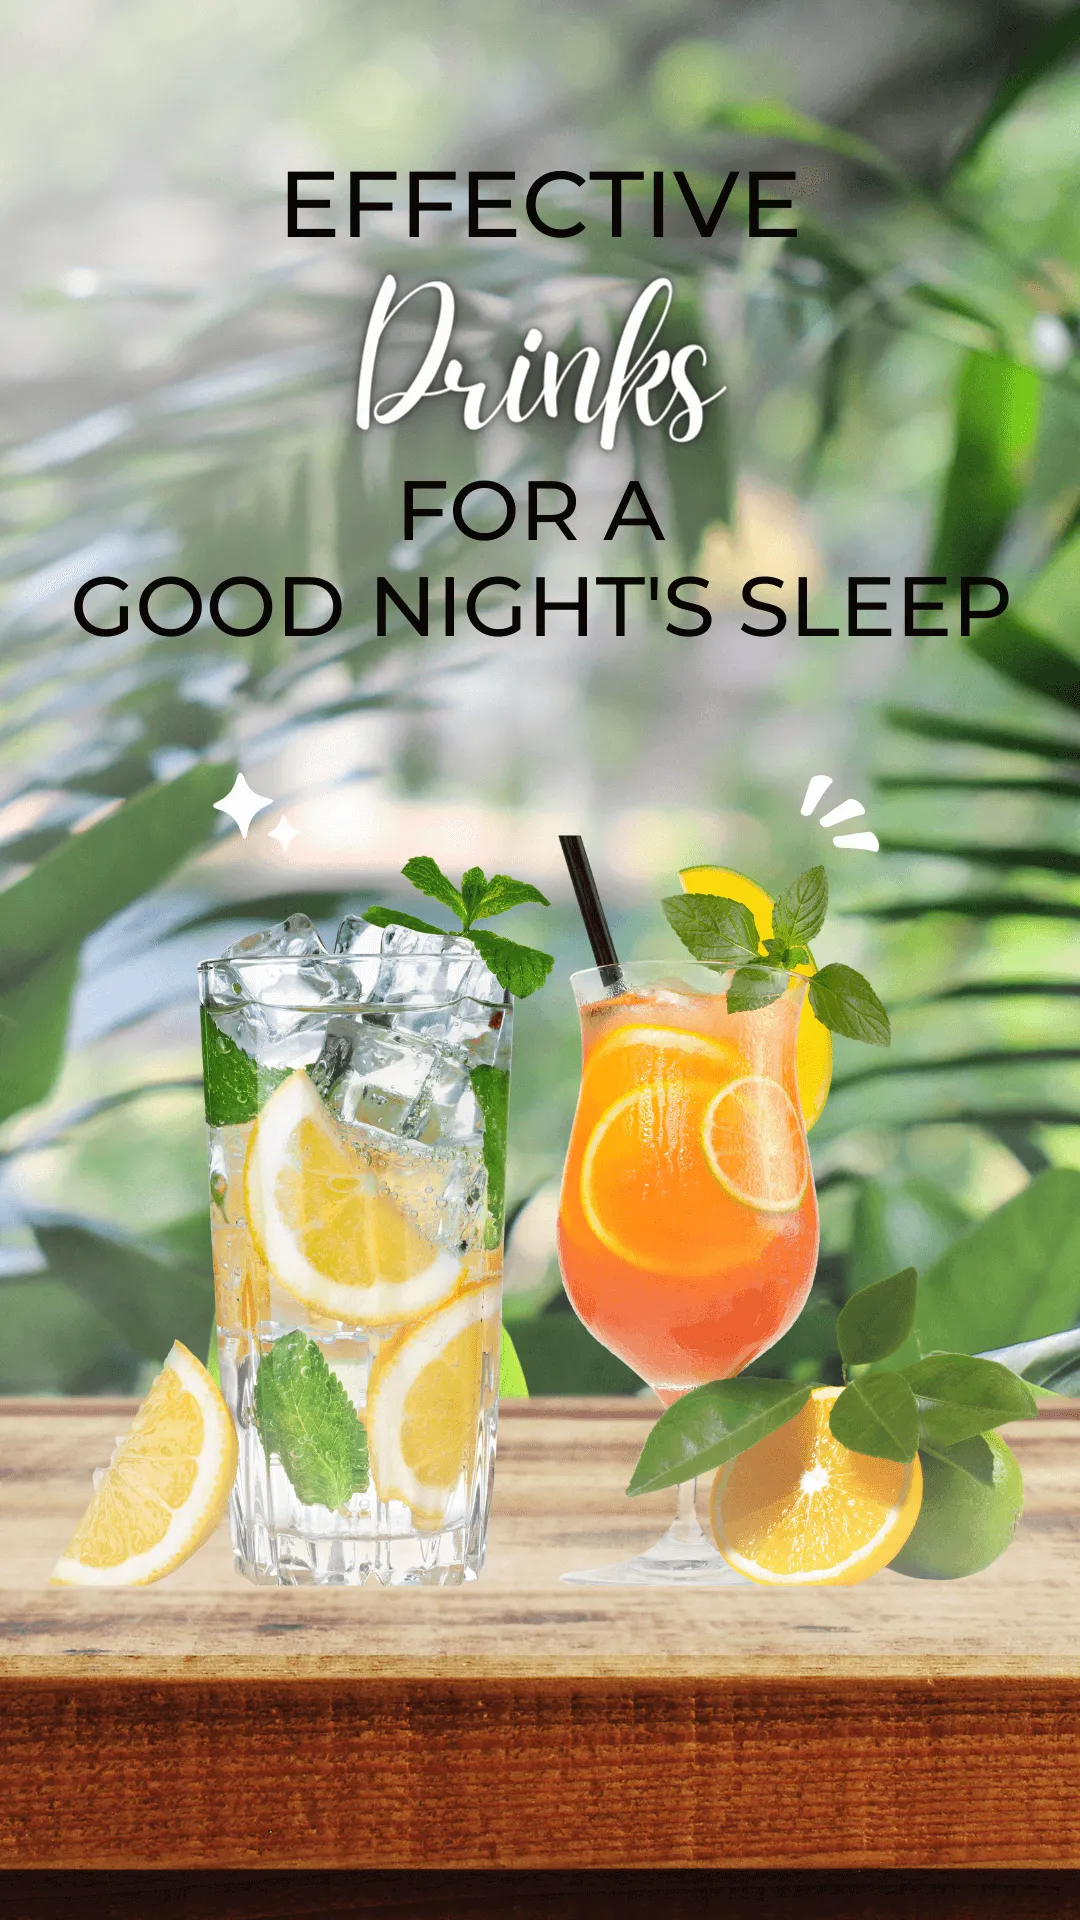 Effective Drinks for a GOOD NIGHT'S SLEEP